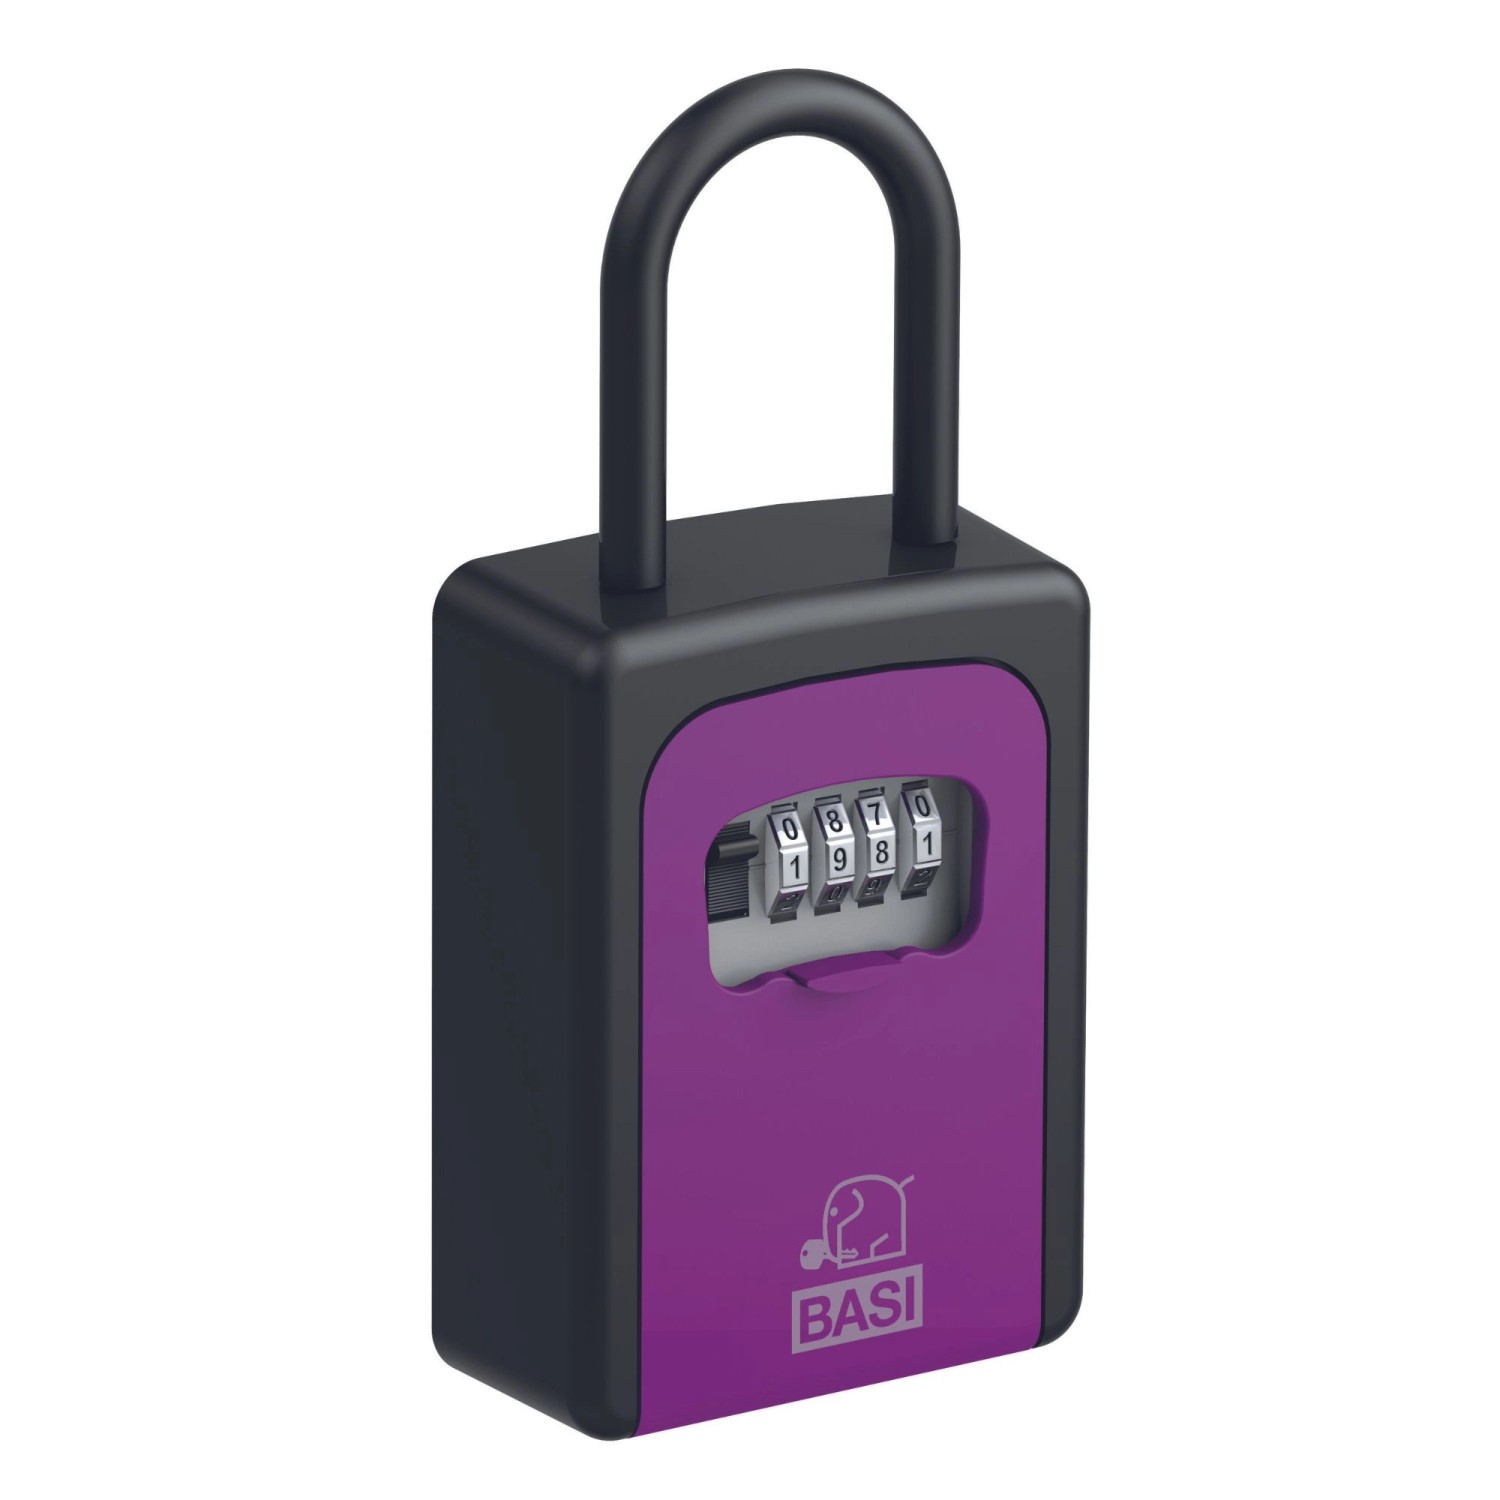 Basi - Schlüsselsafe - SSZ 200B - Schwarz-Lila - mit Zahlenschloss - Aluminium - 2101-0005-1120